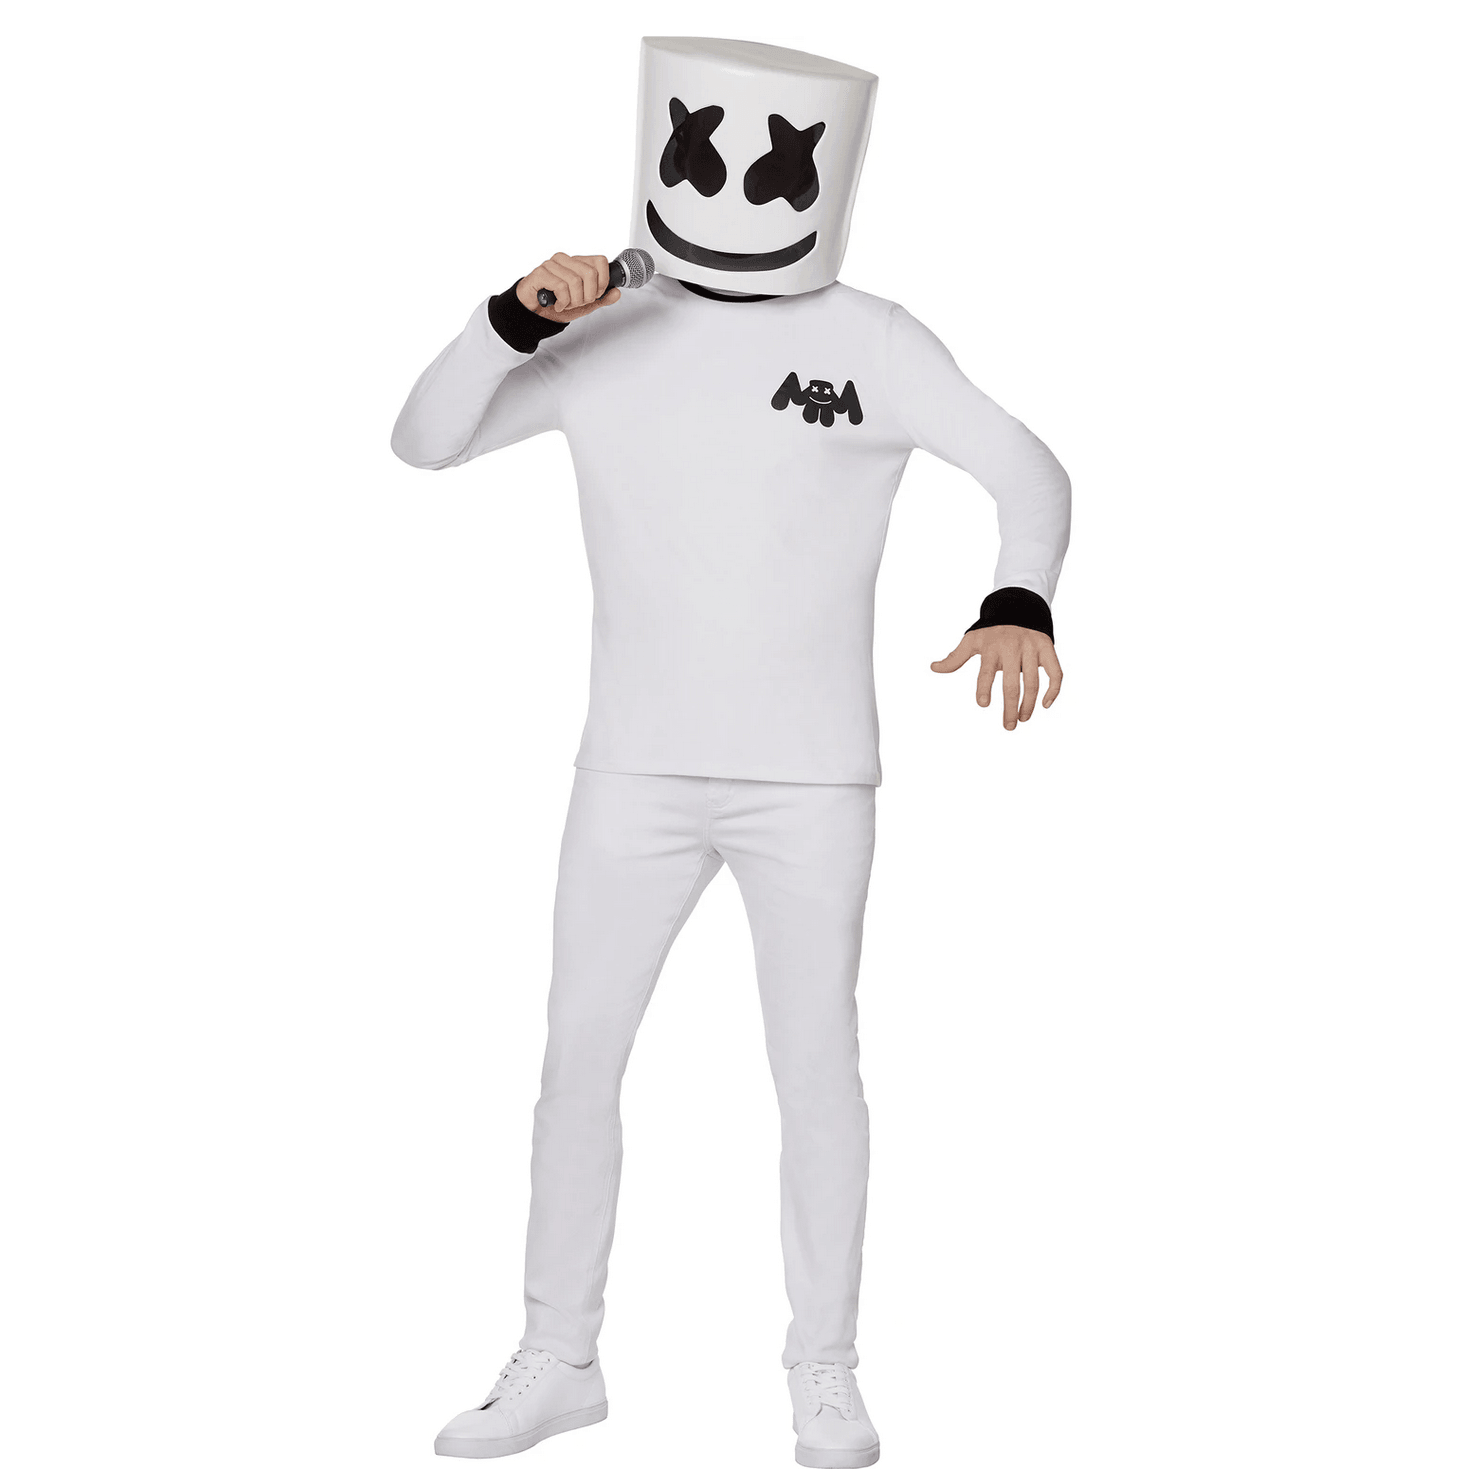 DJ Marshmello Adult Costume